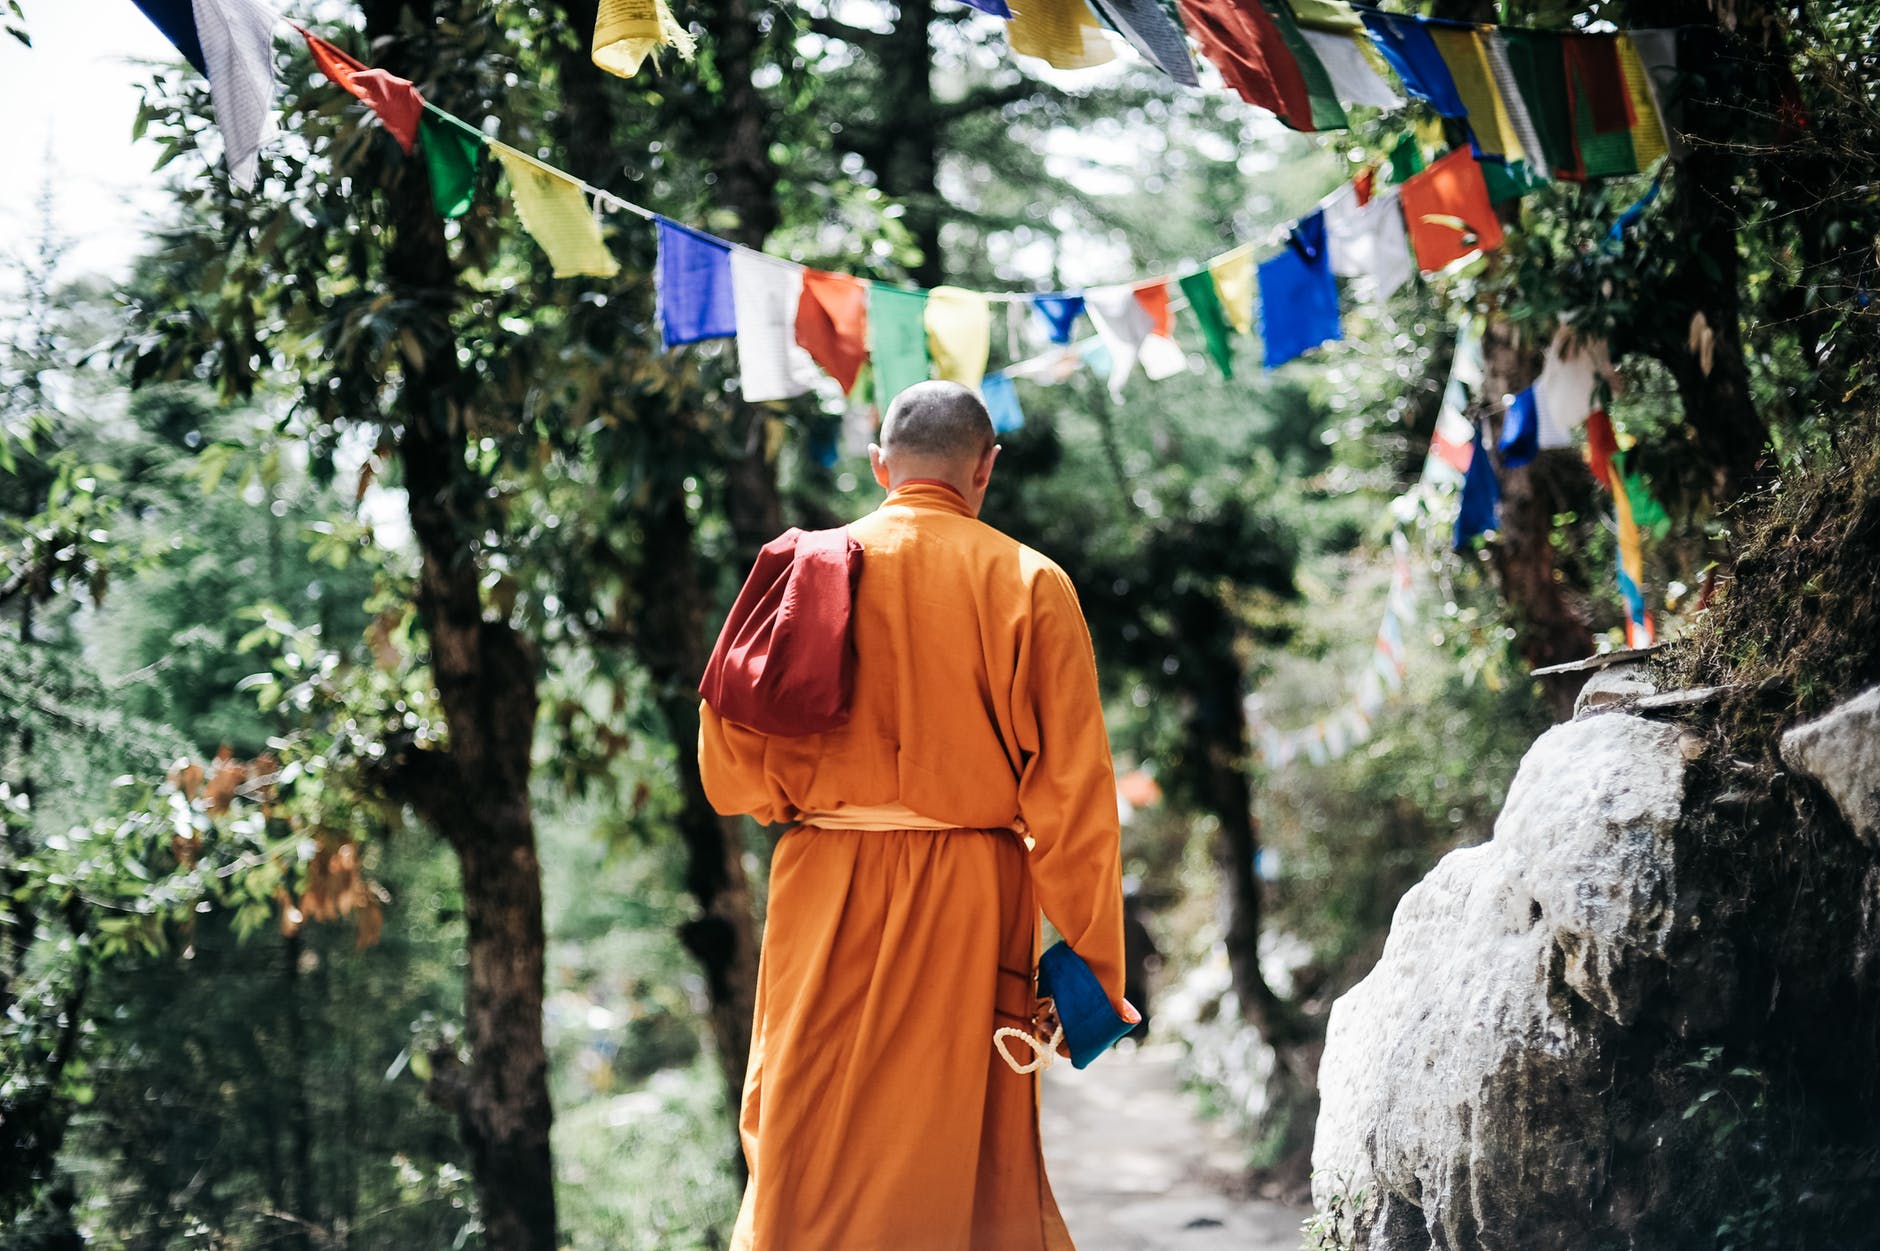 monk walking near buntings during day